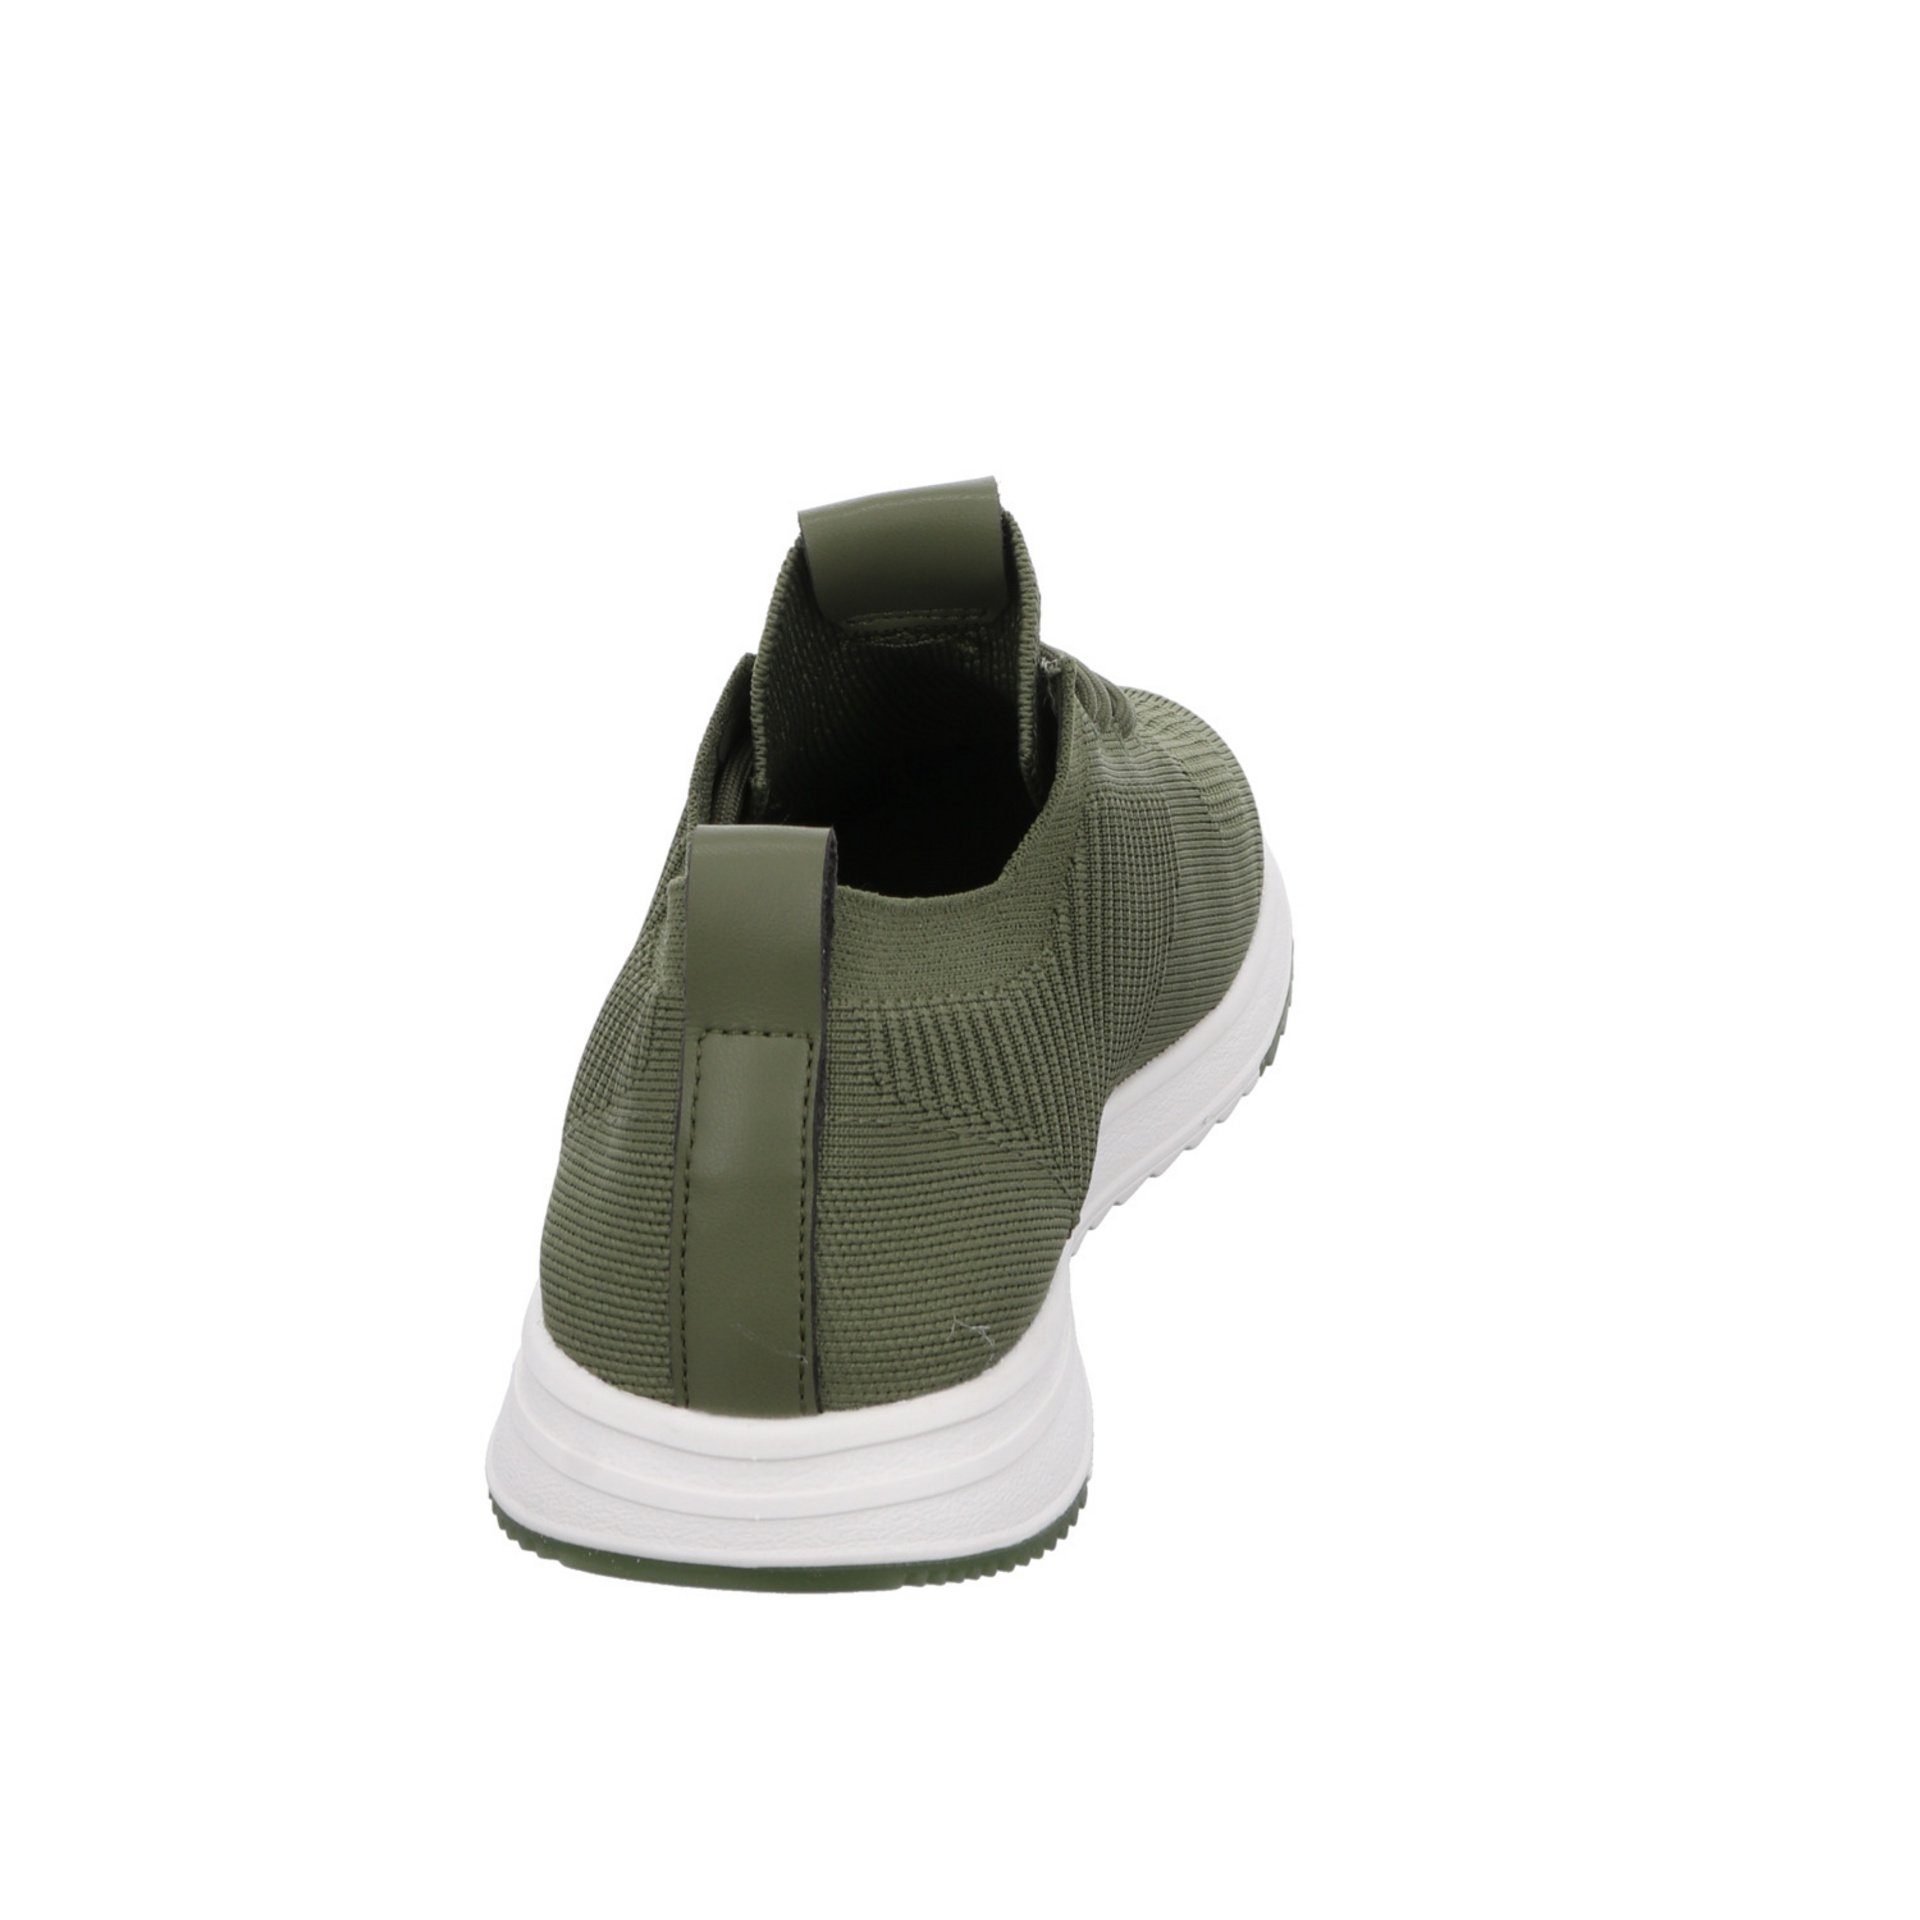 Sneaker Marc Textil Jasper dunkel Herren Slipper Schuhe O'Polo grün+petrol Schnürschuh